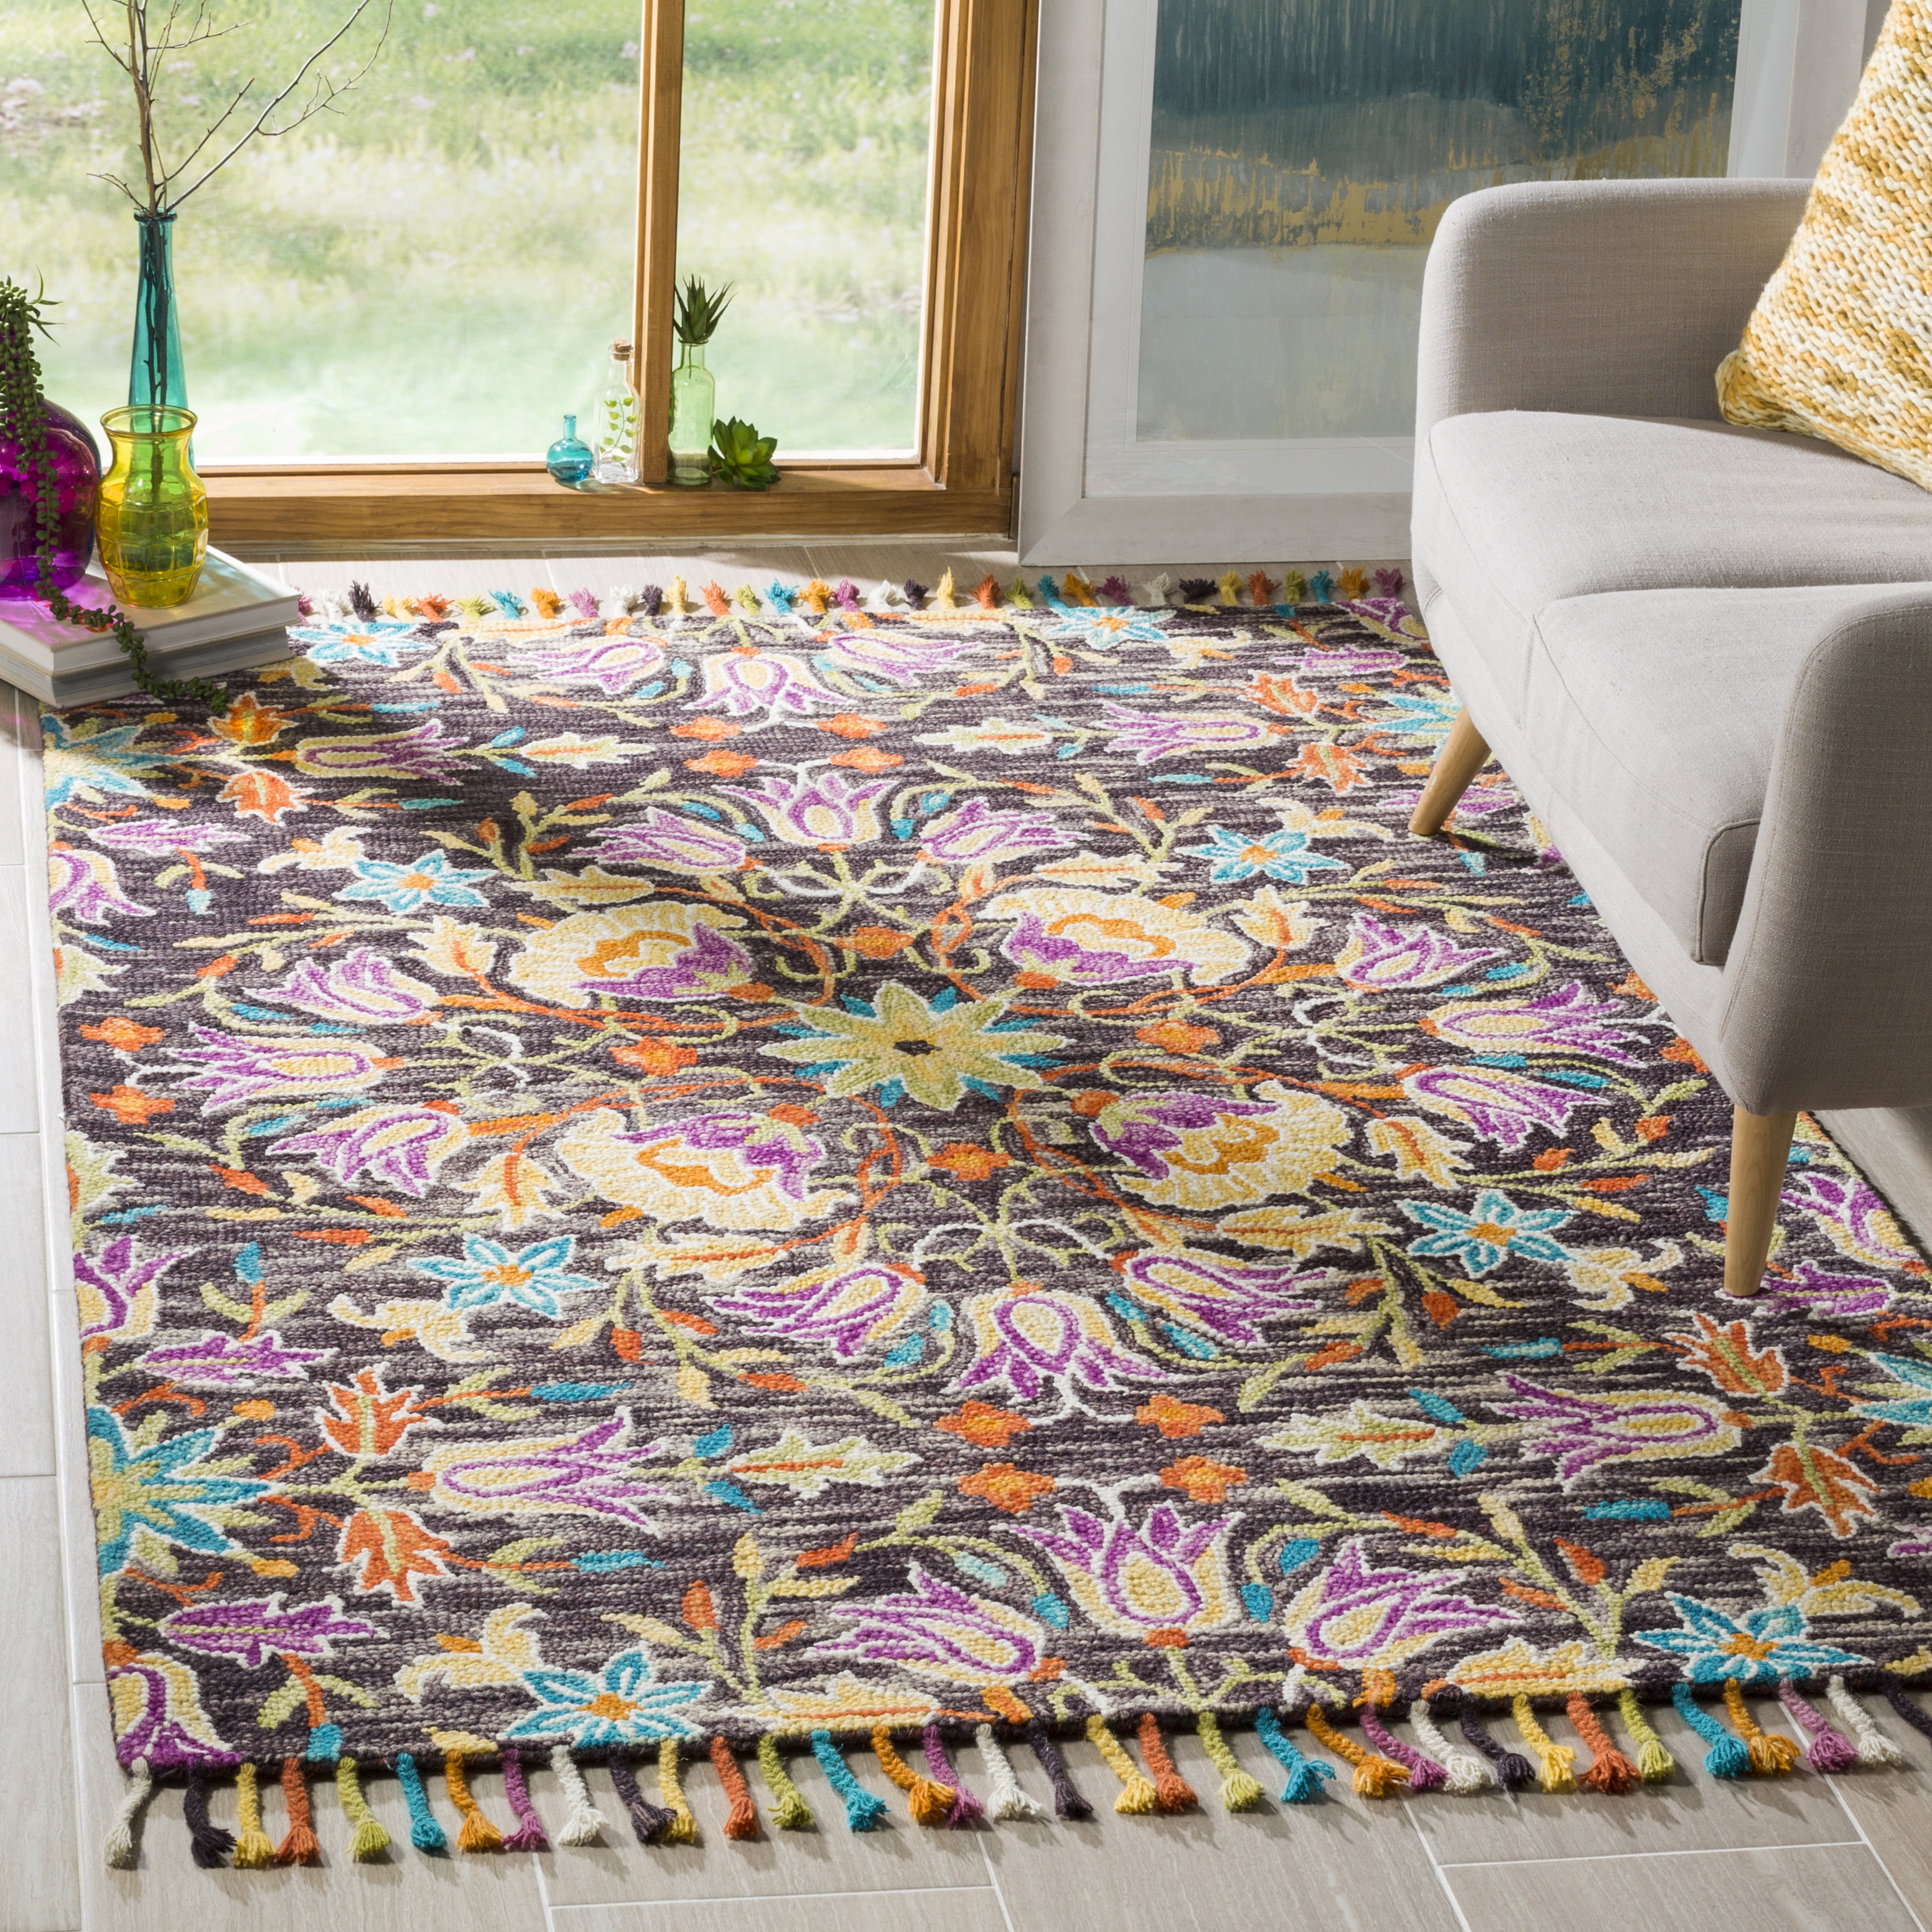 SAFAVIEH Aspen Hughie Colorful Floral Wool Area Rug, Black/Purple, 8' x 10' - Walmart.com